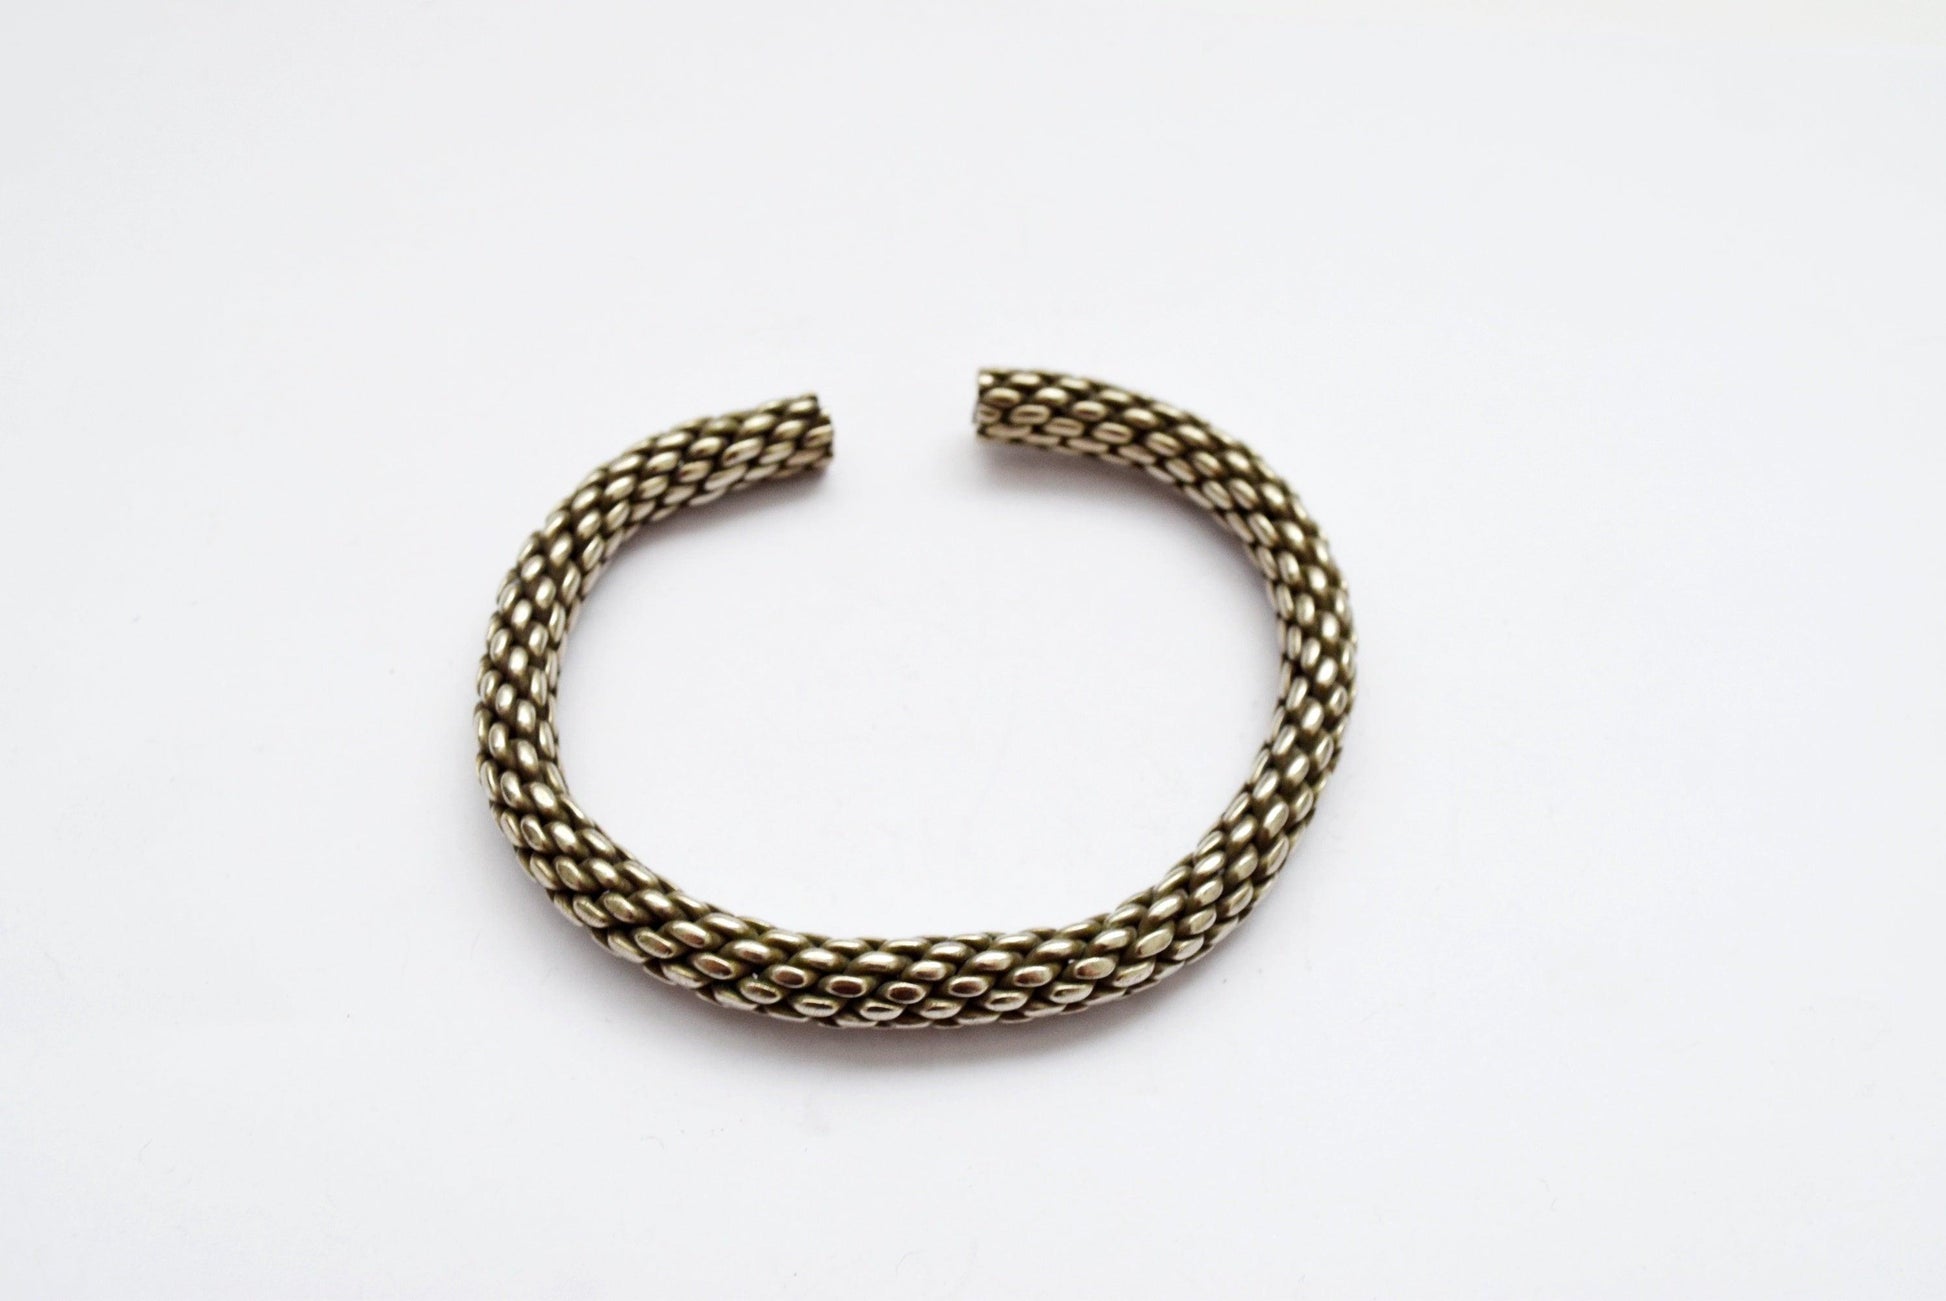 Straits Chinese woven bracelet